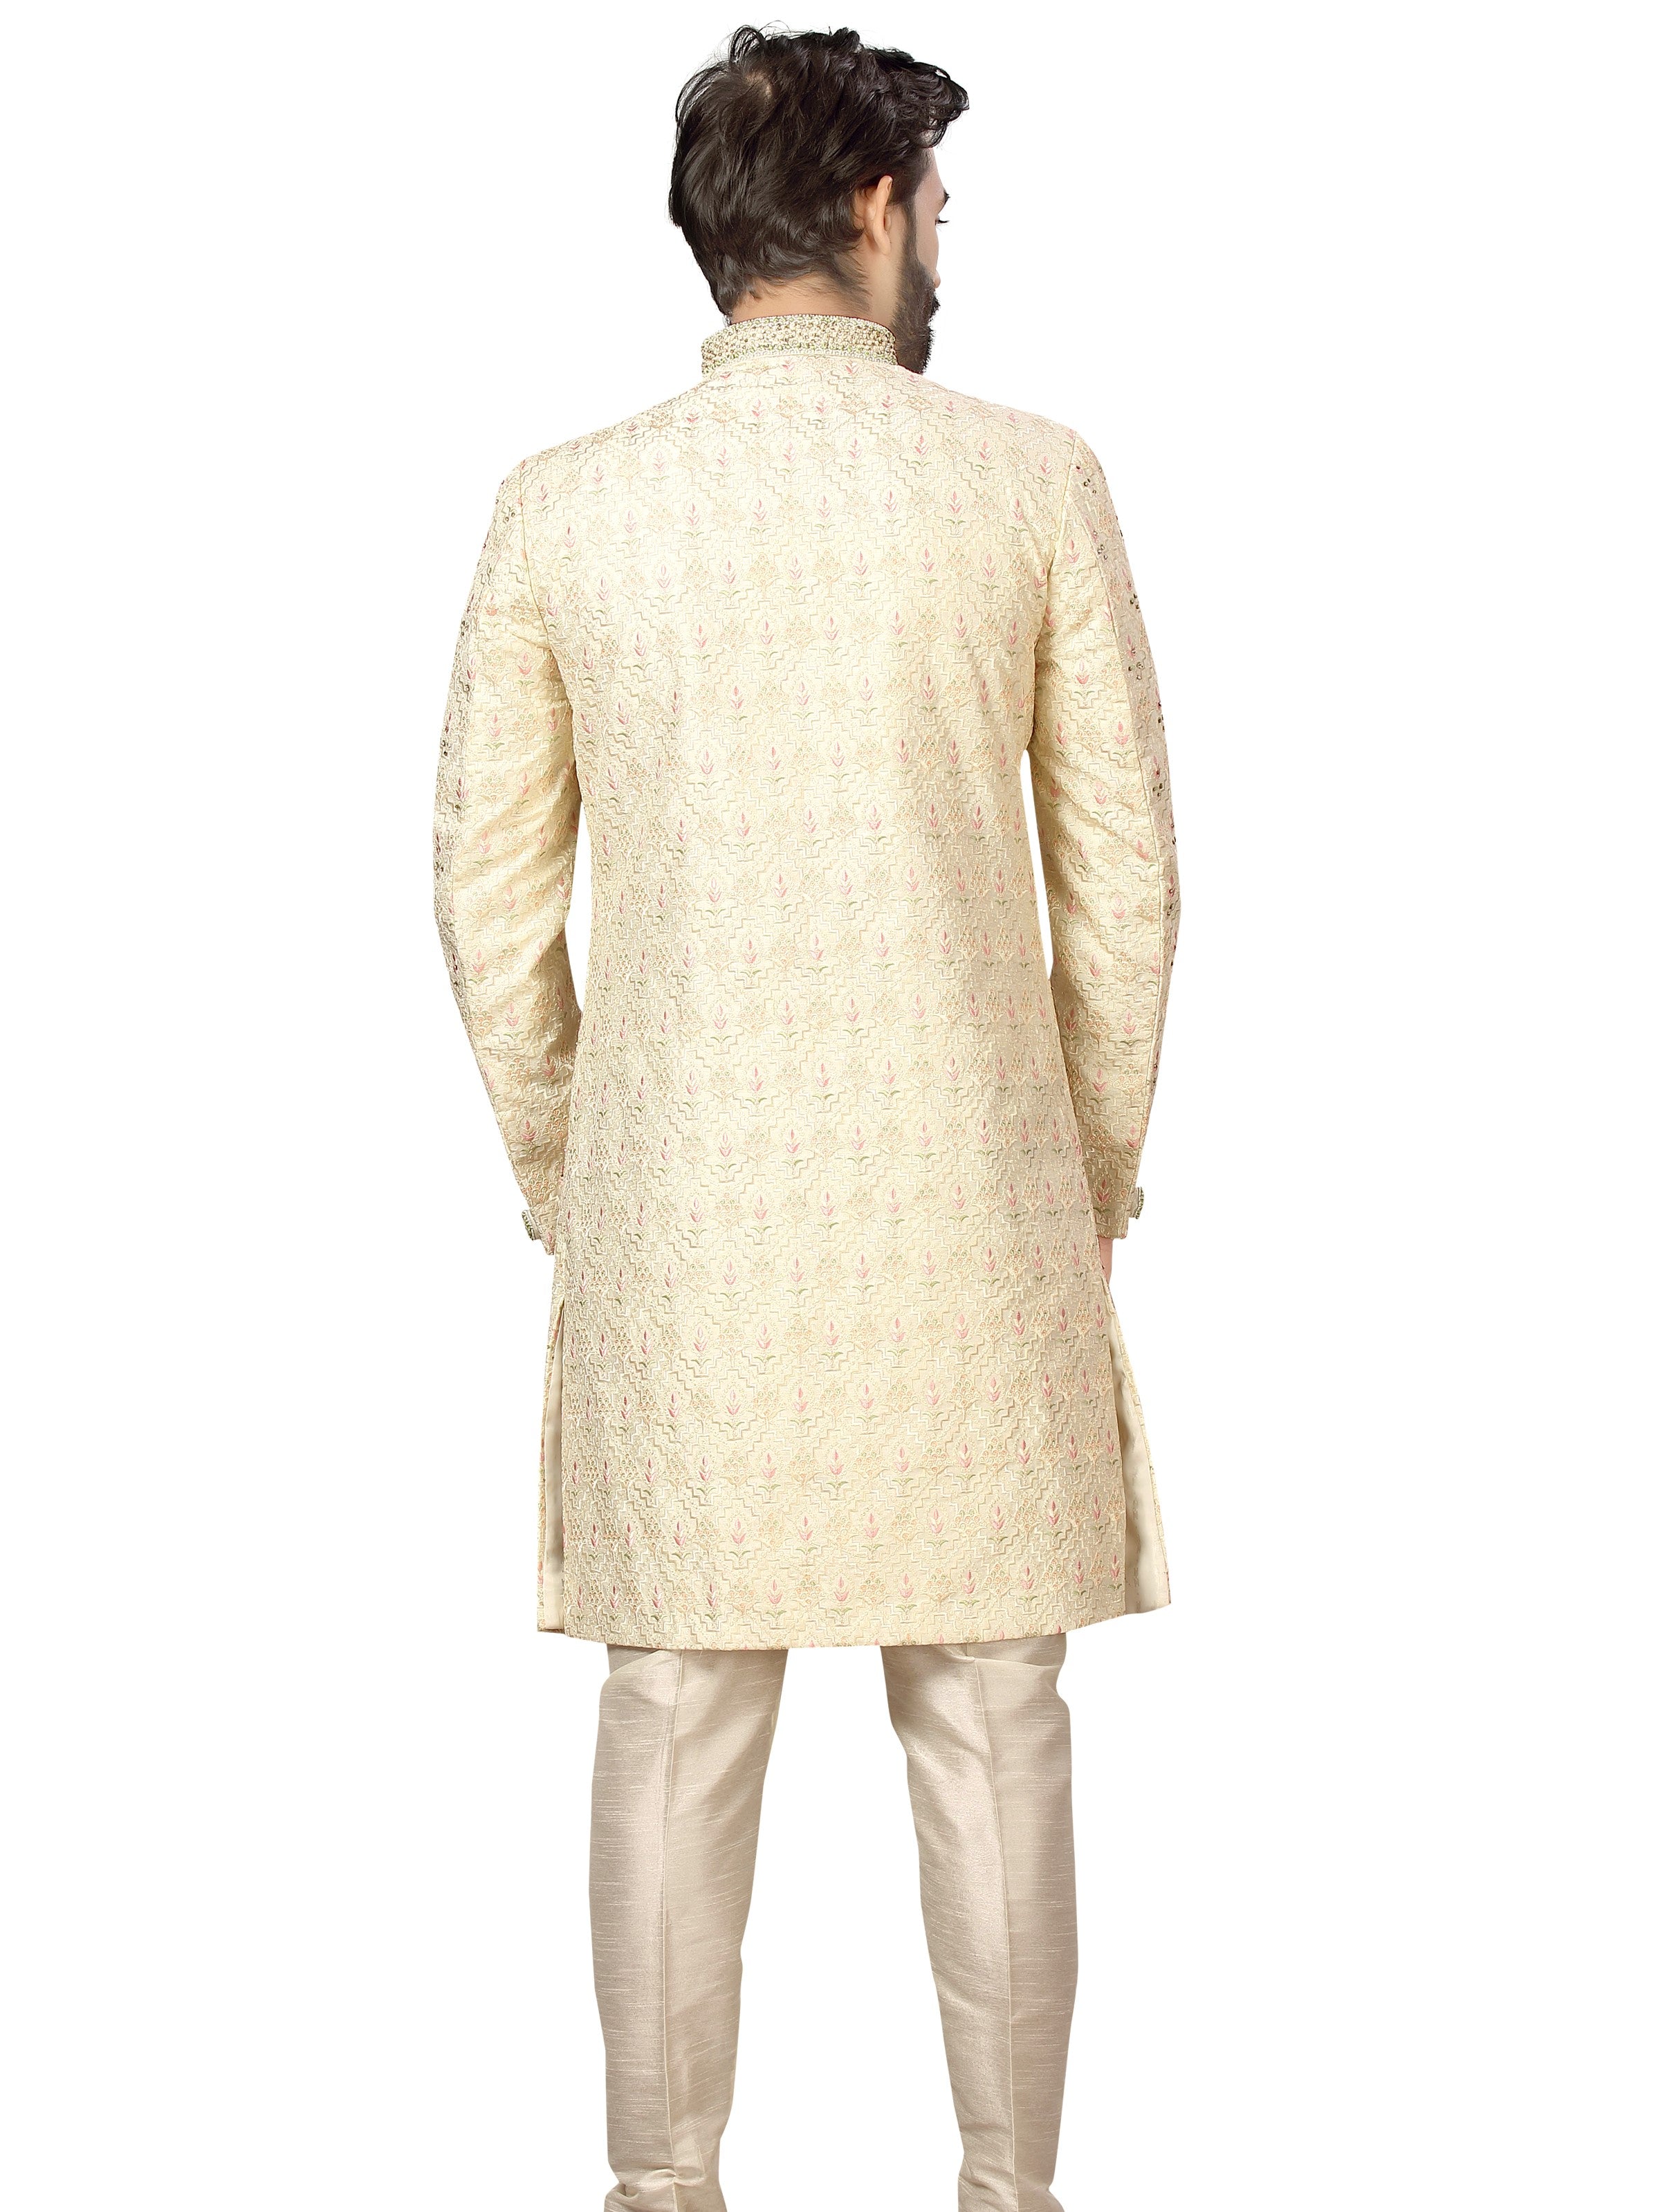 Mens Sherwani Suit - Roop Darshan